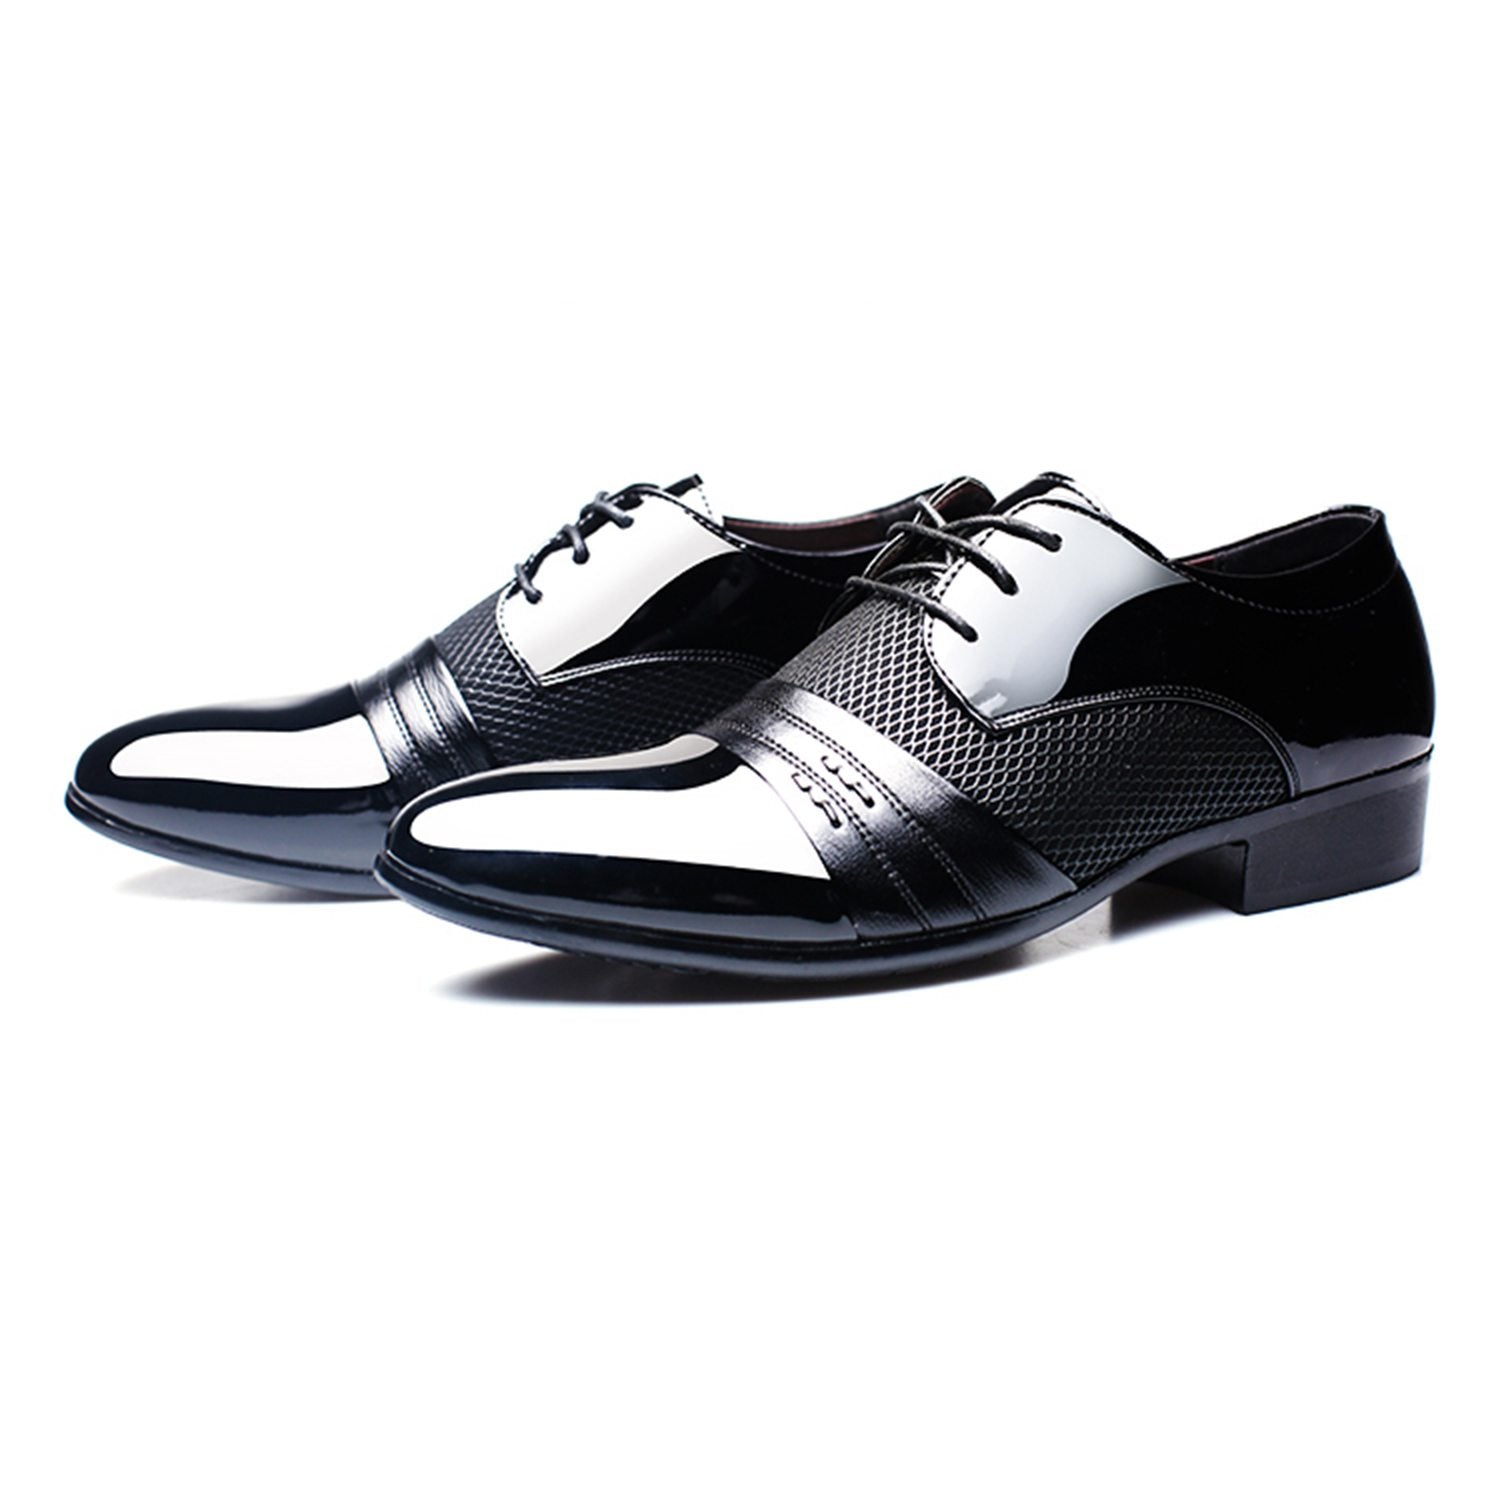 Classical Fashion Wedding Flats Shoes Men Dress Luxury Men'S Business Oxfords Casual Shoe Black / Brown Leather Derby Sho - ebowsos